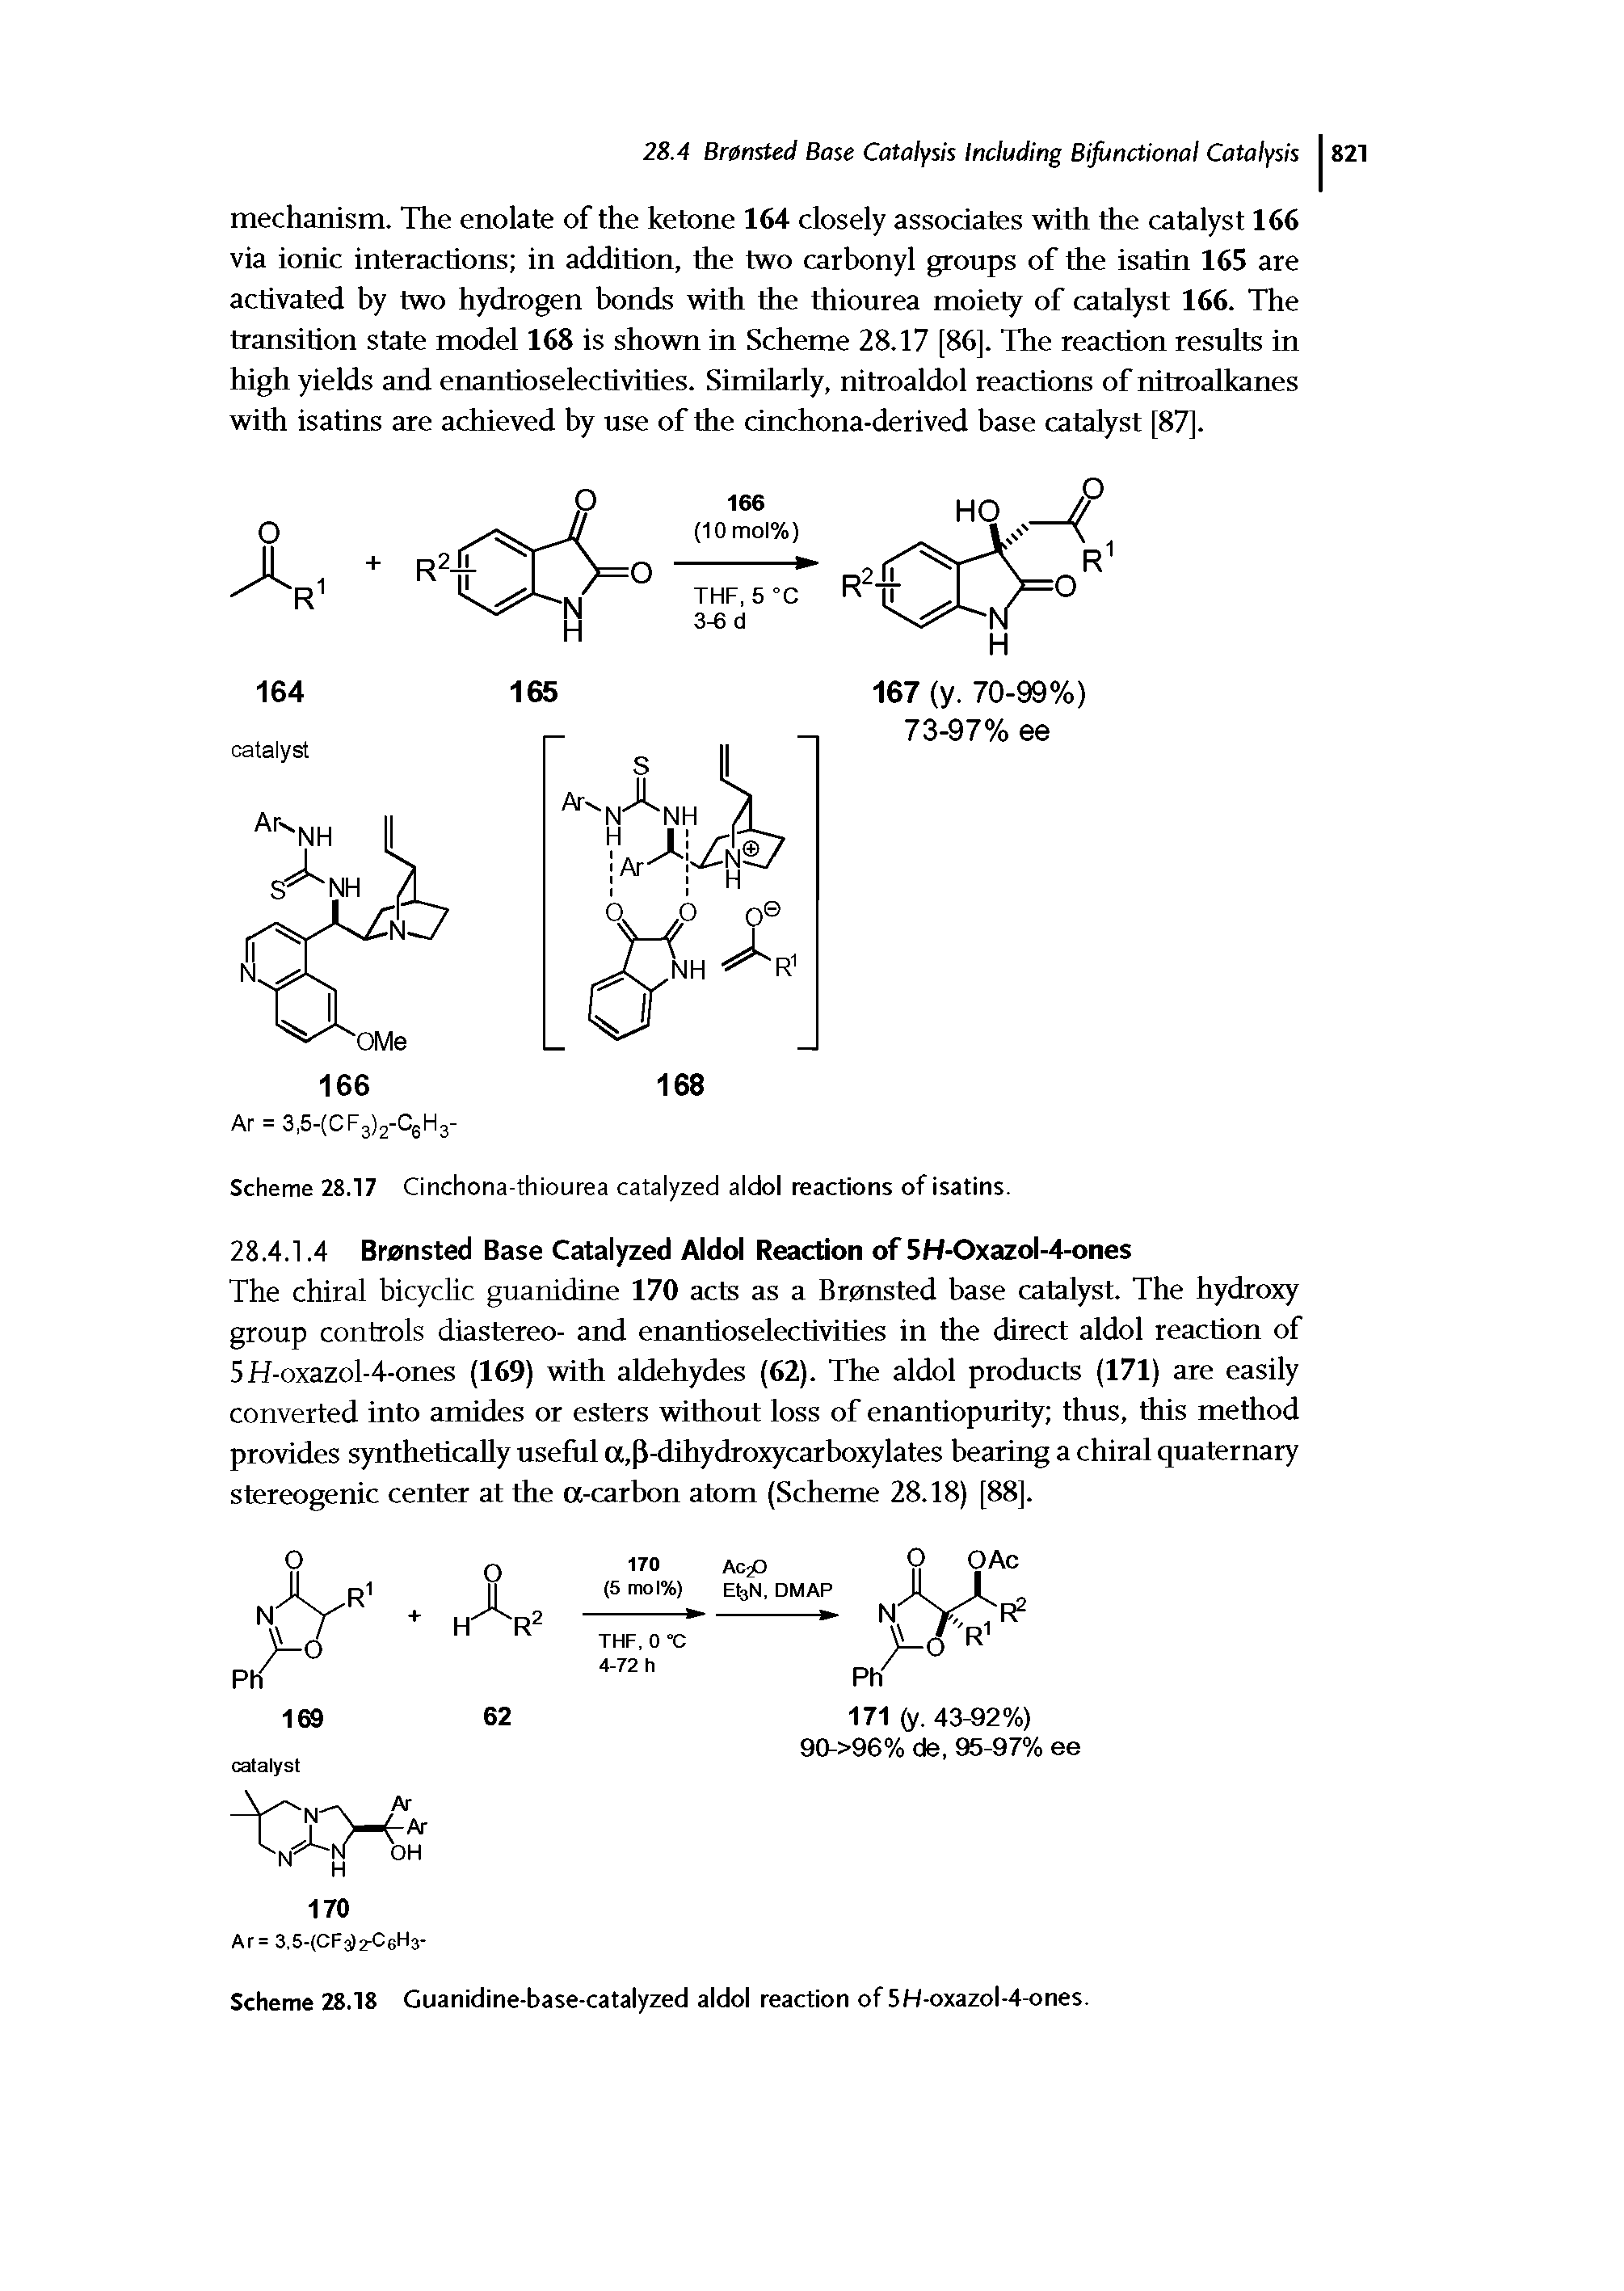 Scheme 28.18 Cuanidine-base-catalyzed aldol reaction of 5H-oxazol-4-ones.